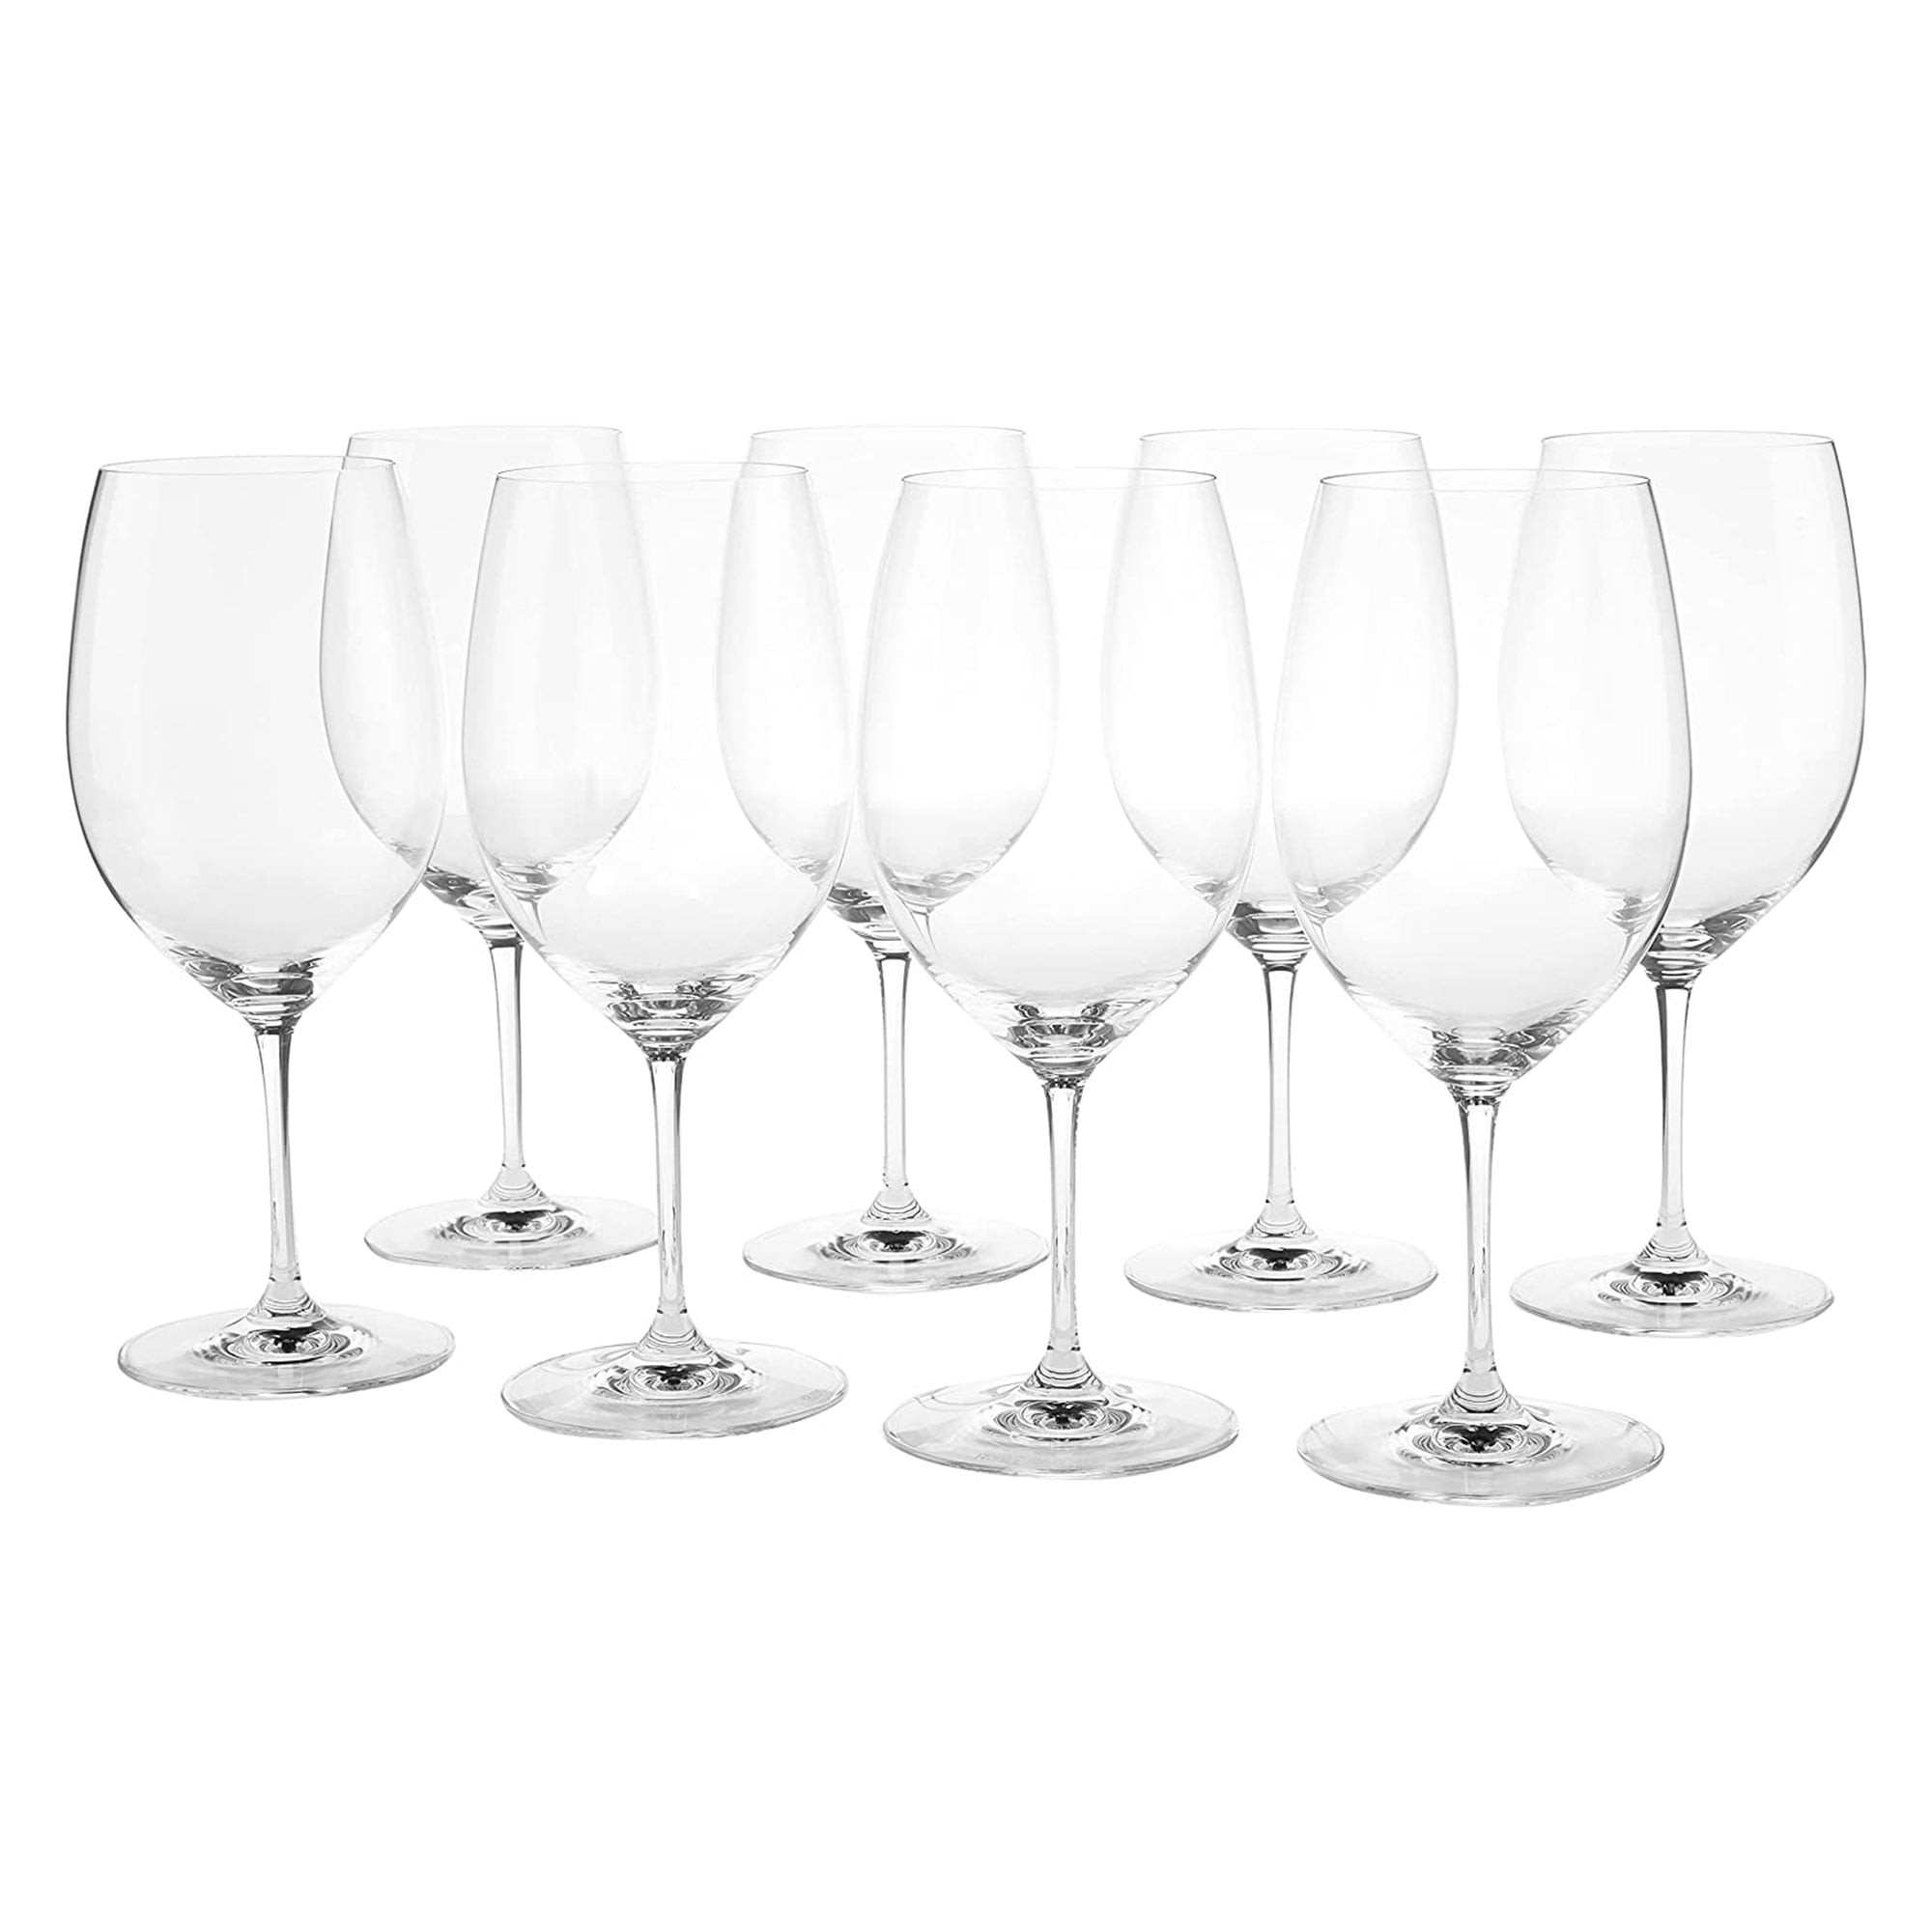 Tuscany Classics 25 oz. Crystal Red Wine Glass